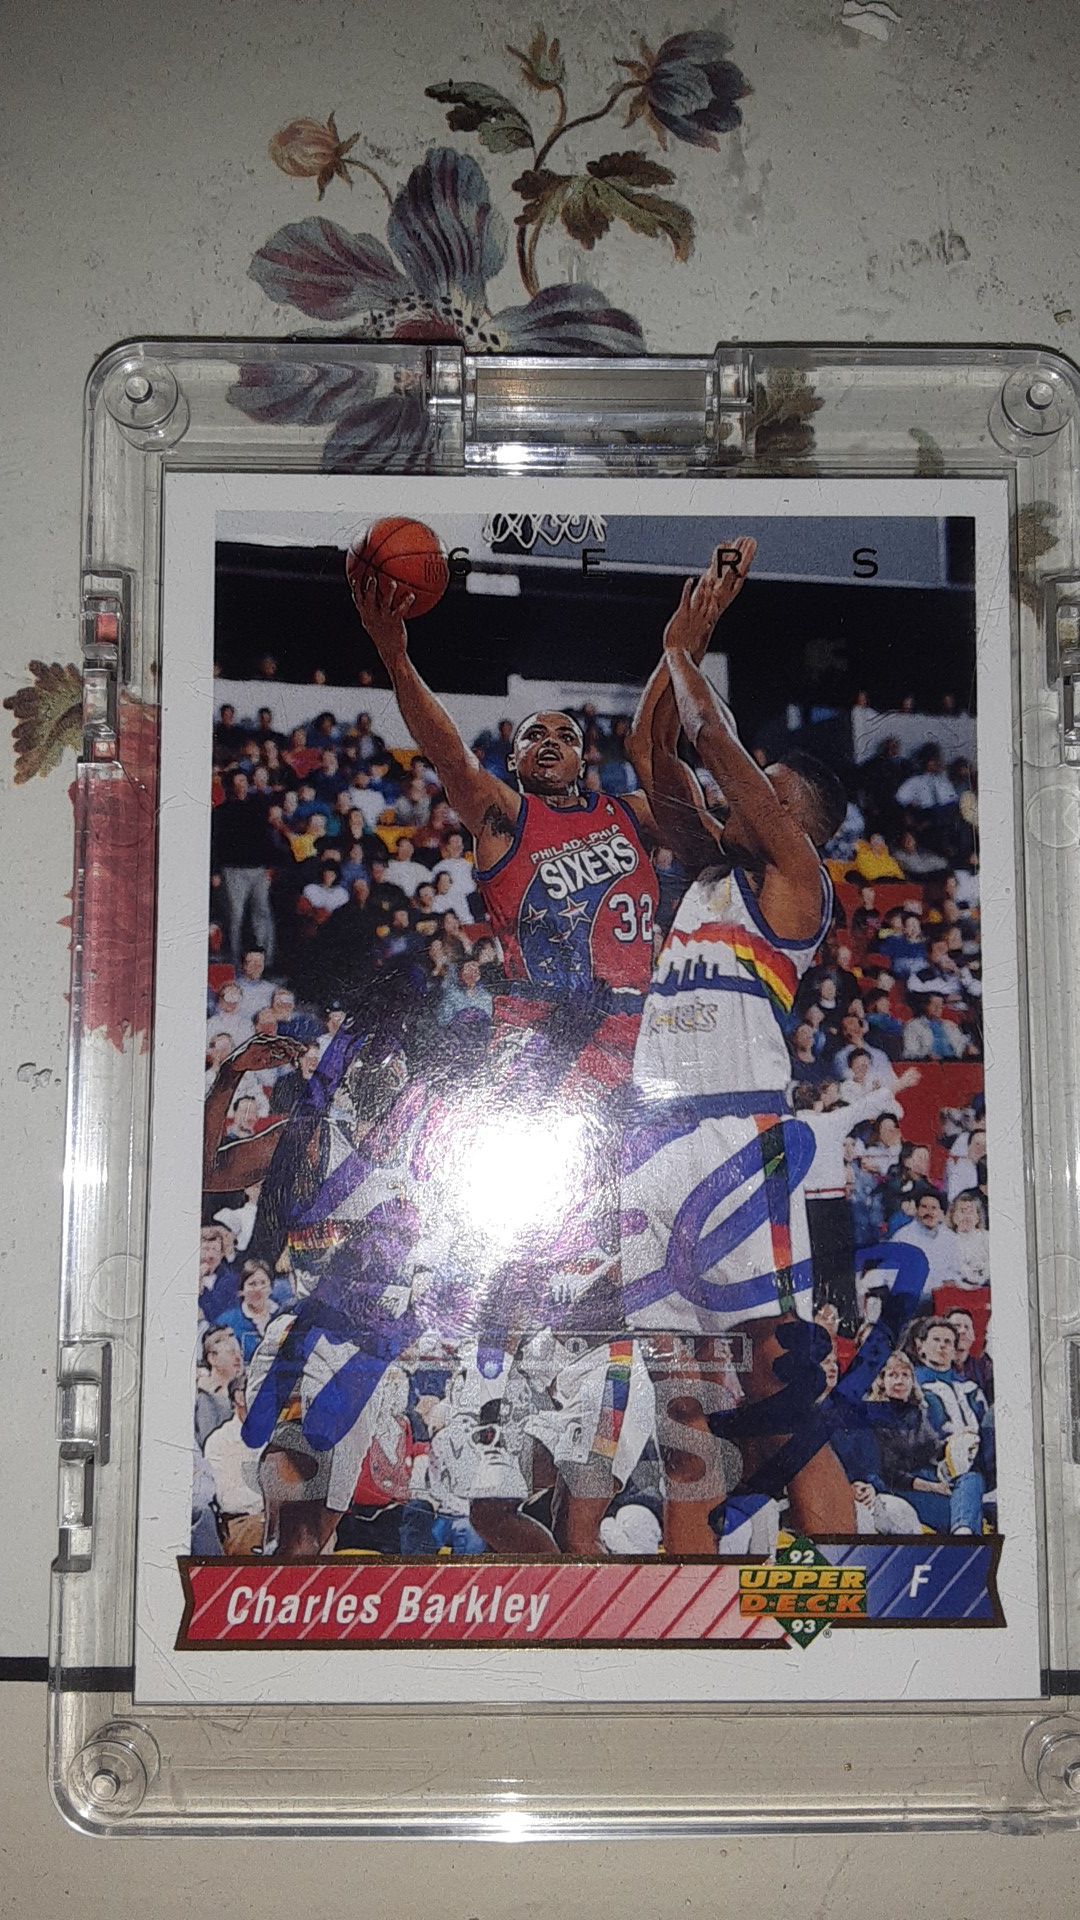 Charles Barkley autographed basketball card.